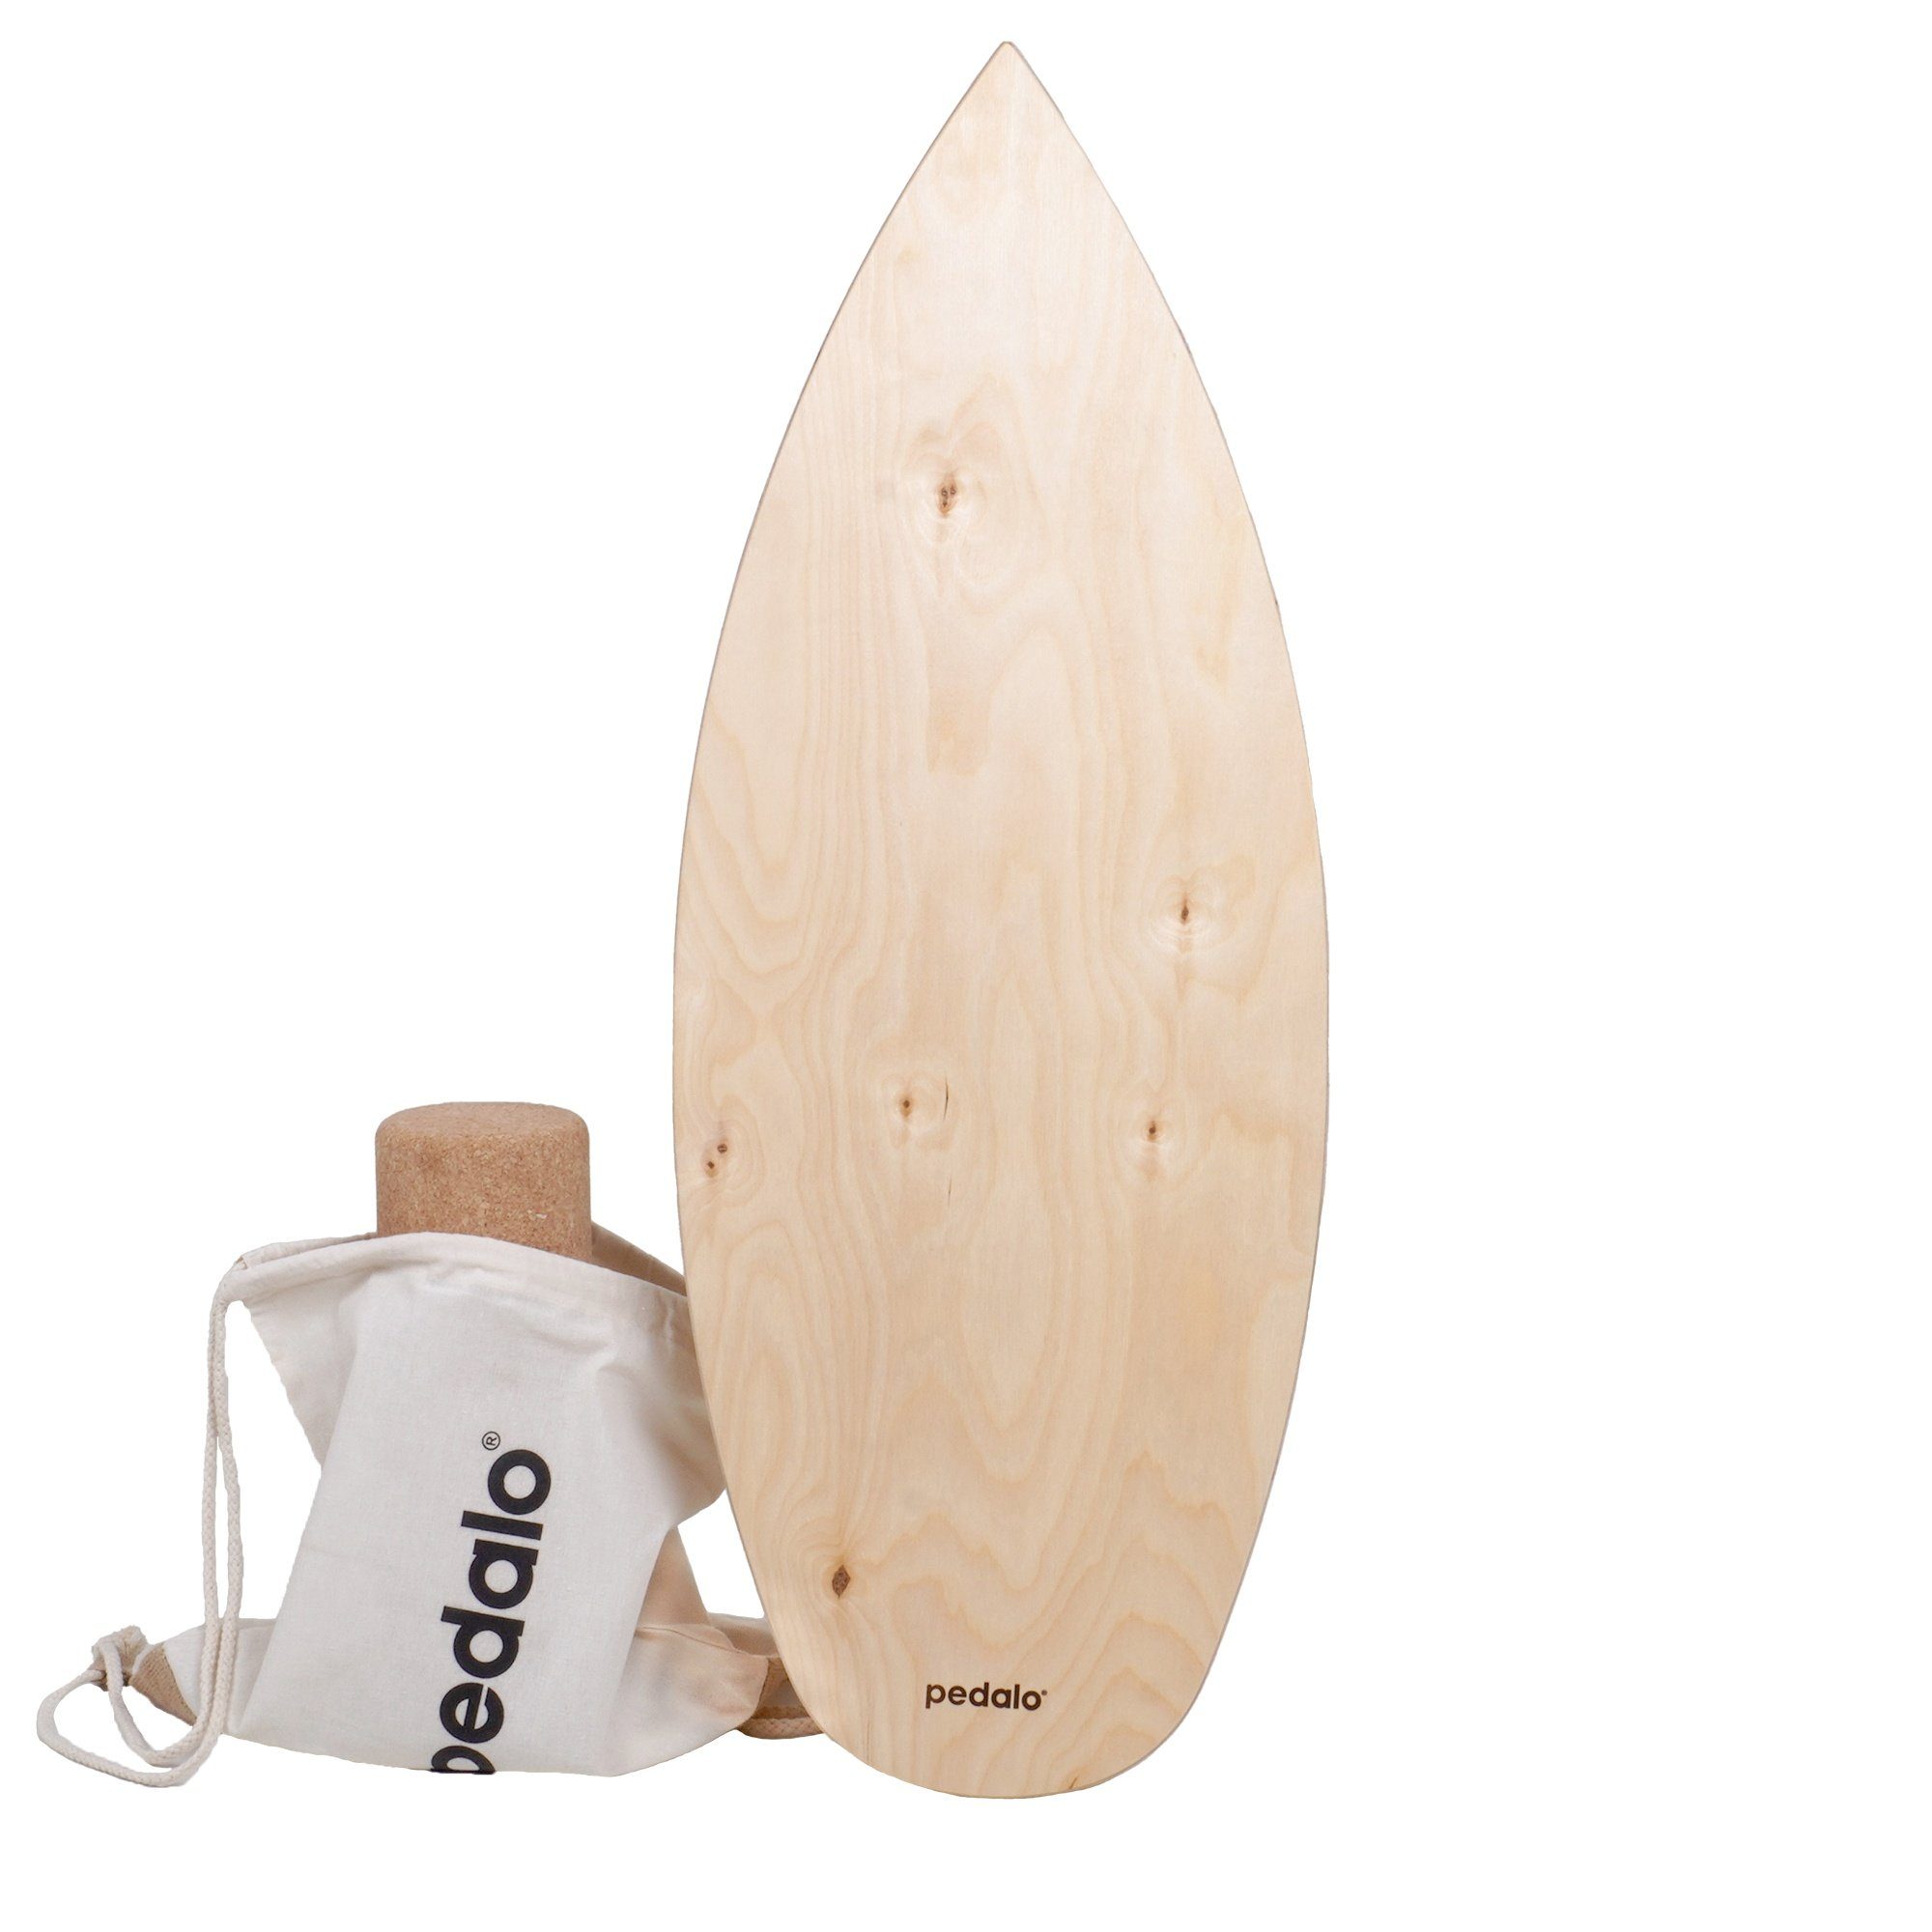 pedalo® Balanceboard Board Gleichgewichtstrainer Oberfläche Balance 10 stabil, Korkrolle Board Holz Pur cm, inkl. Koordinationstrainer, Faszien